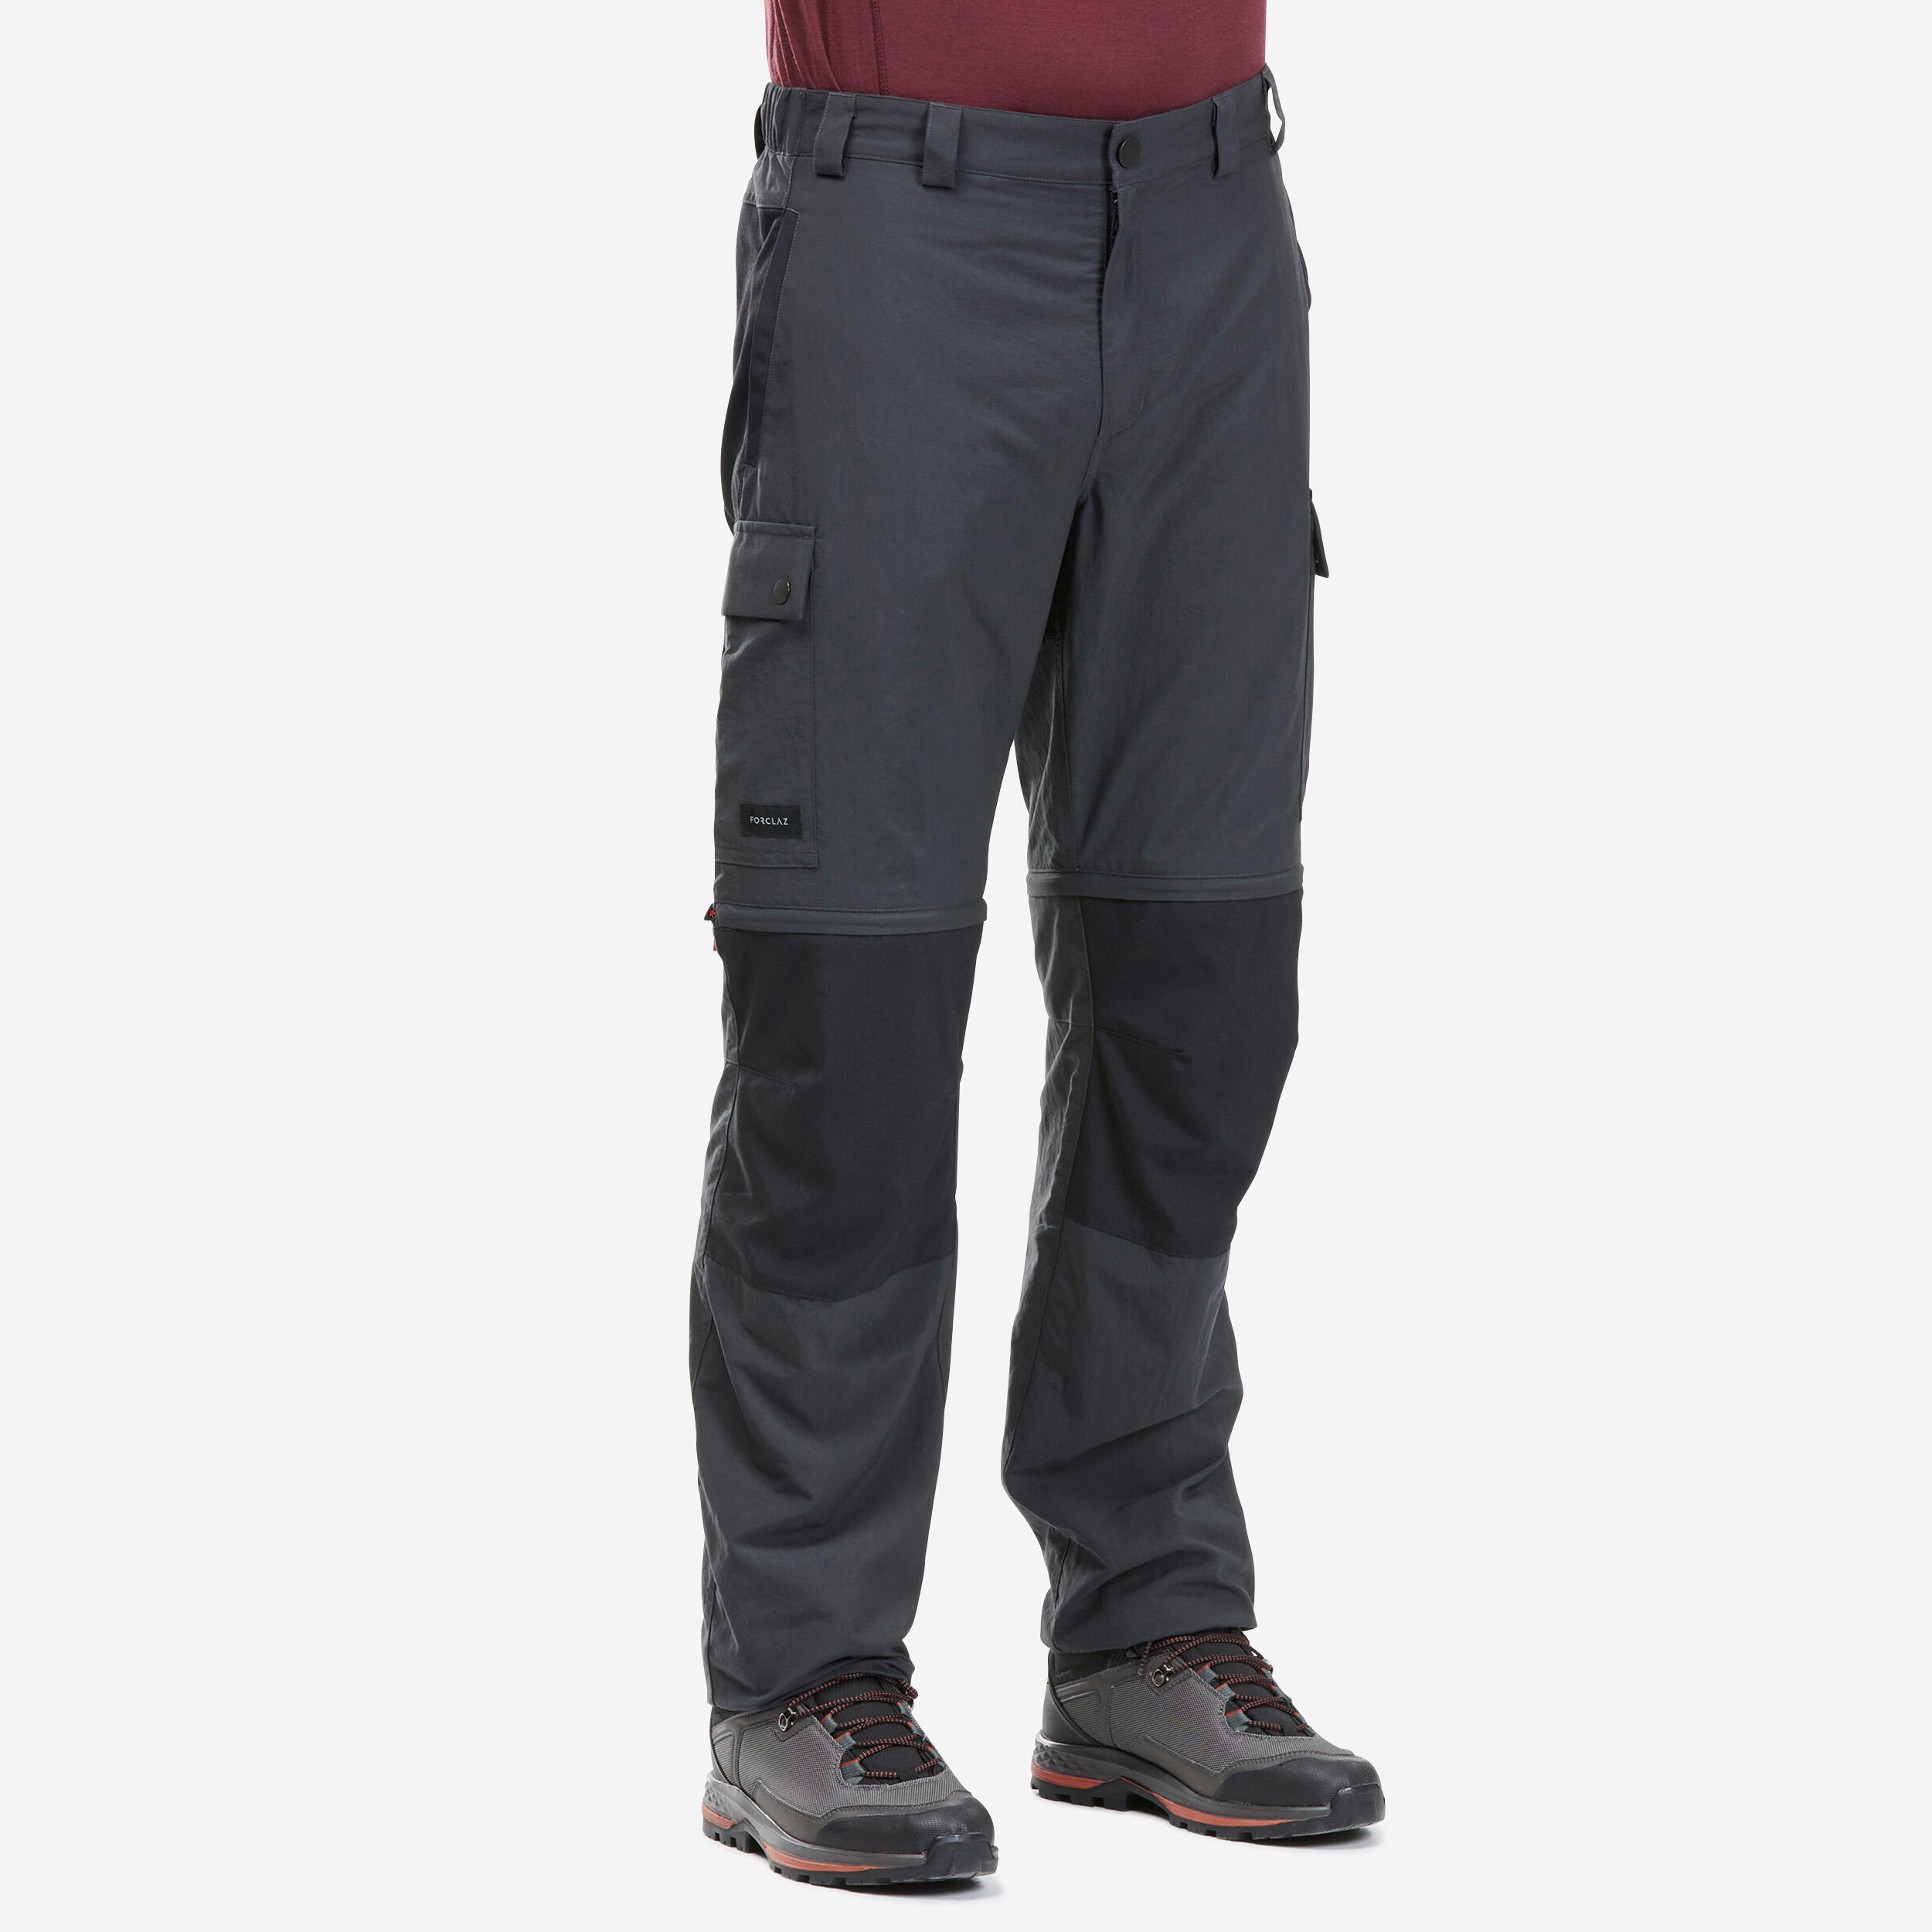 Men’s 2-in-1 Hiking Pants - MT 100 Grey - FORCLAZ